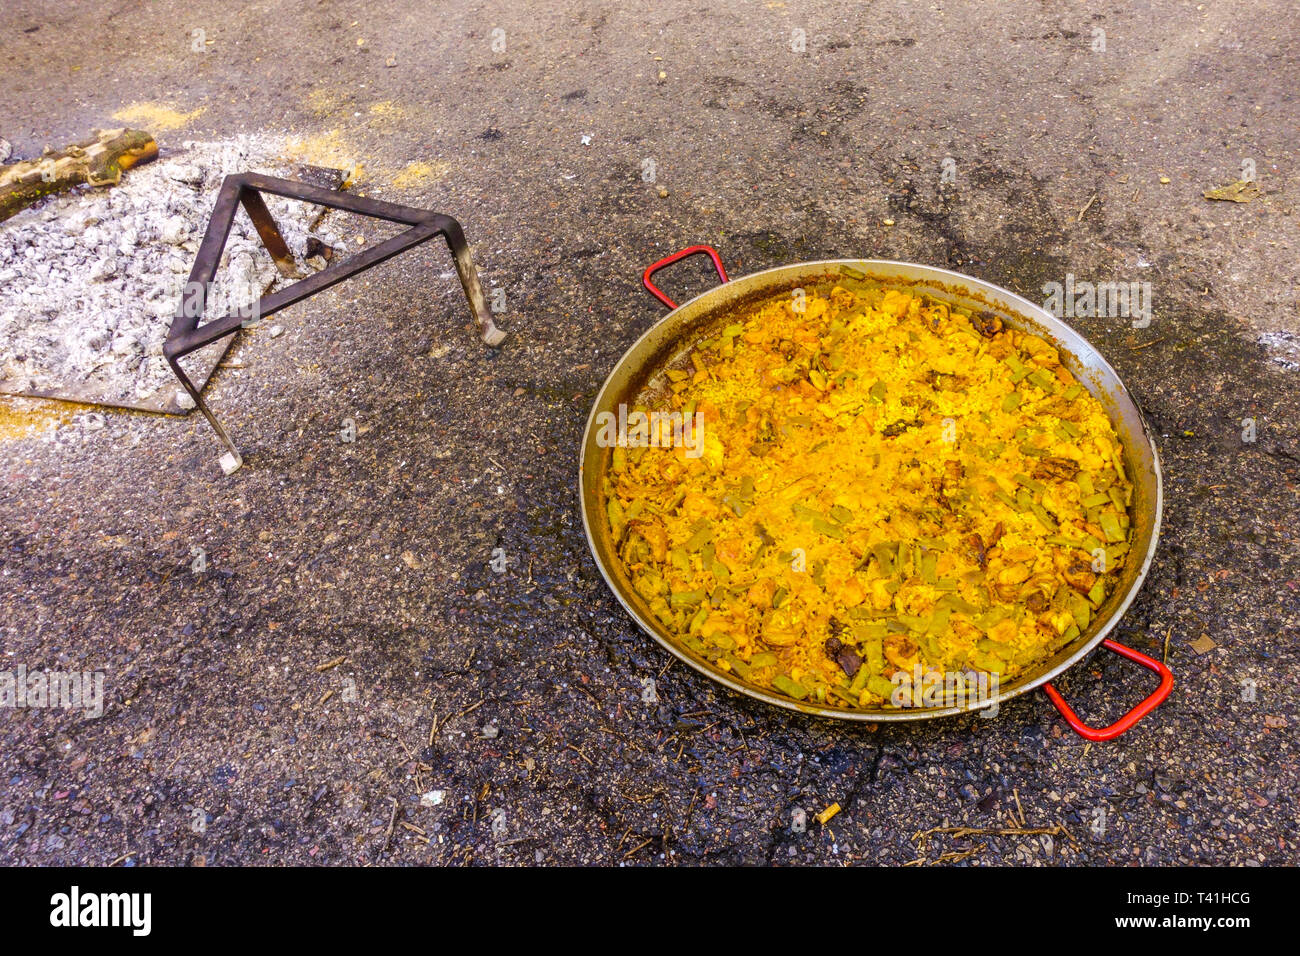 Paella cooking on the street, Valencia Spain Stock Photo